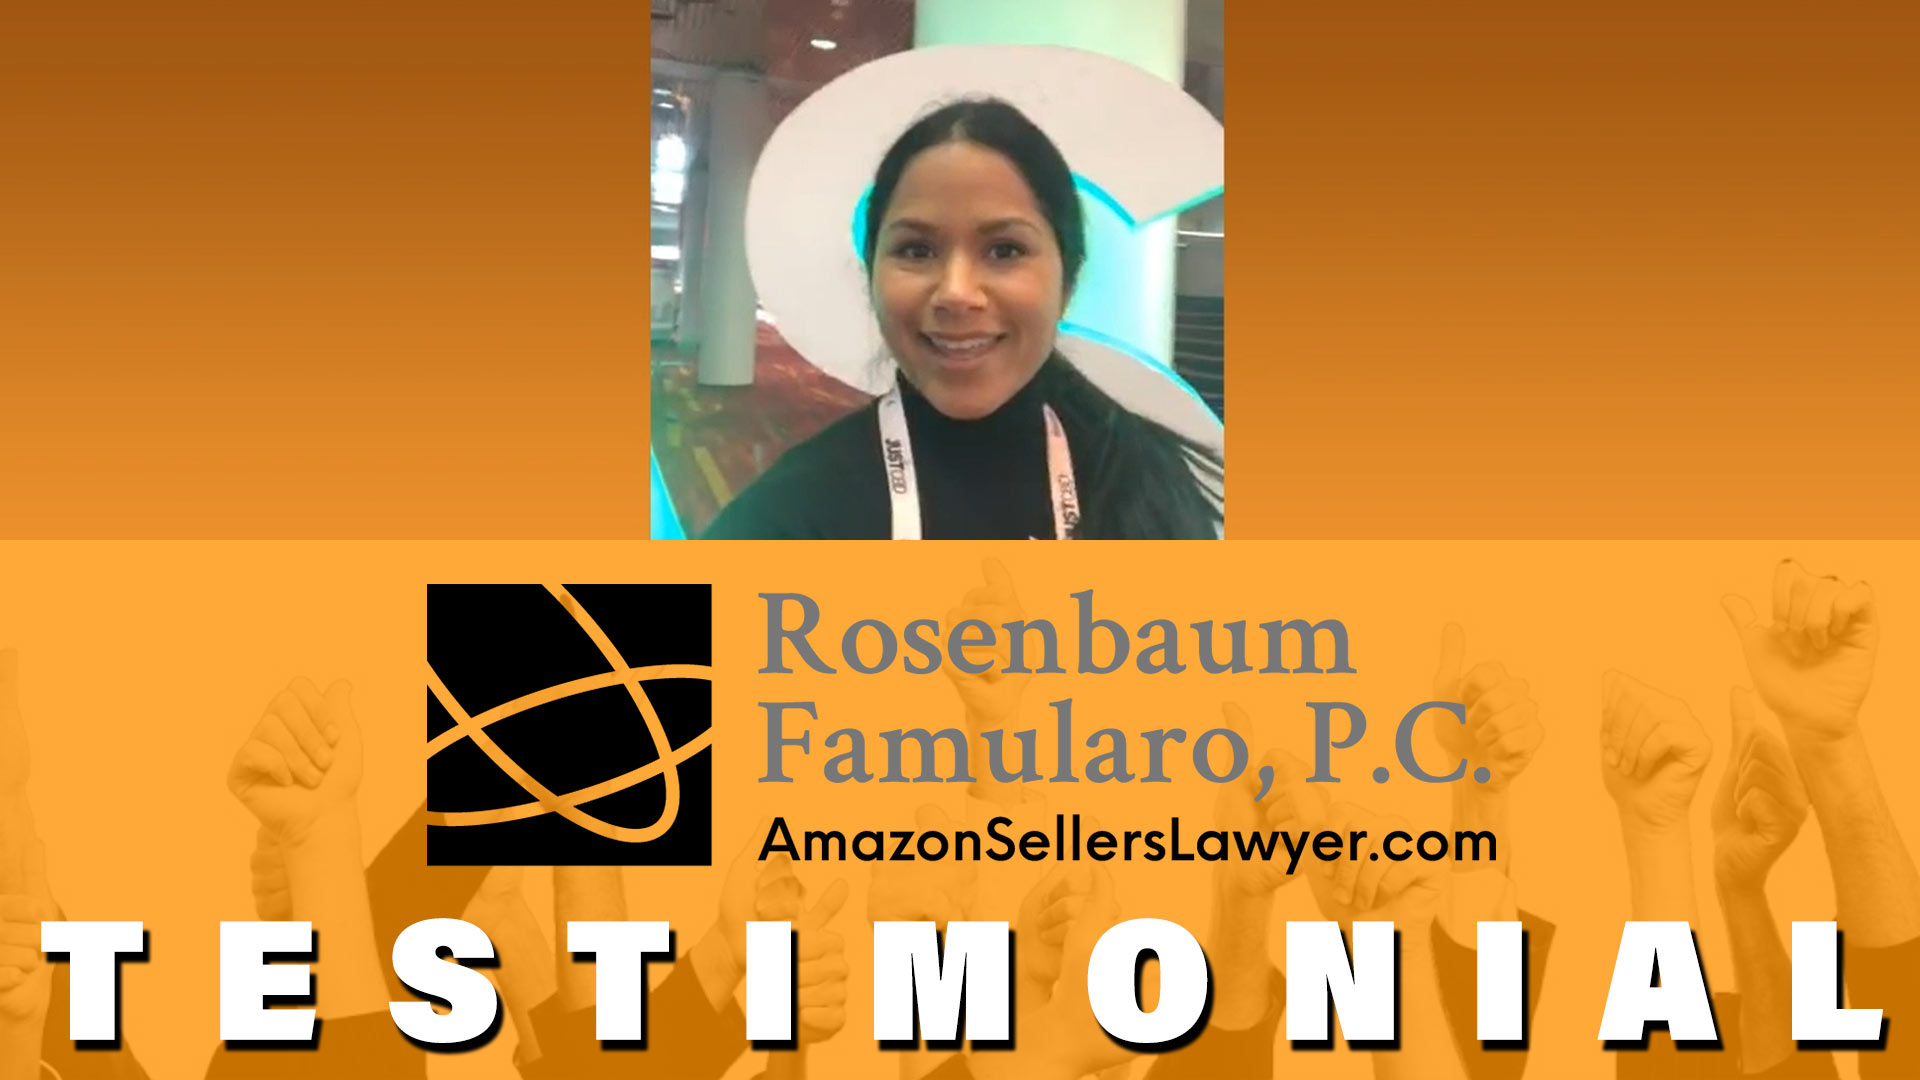 ASD market week testimonial for Amazon lawyer CJ Rosenbaum